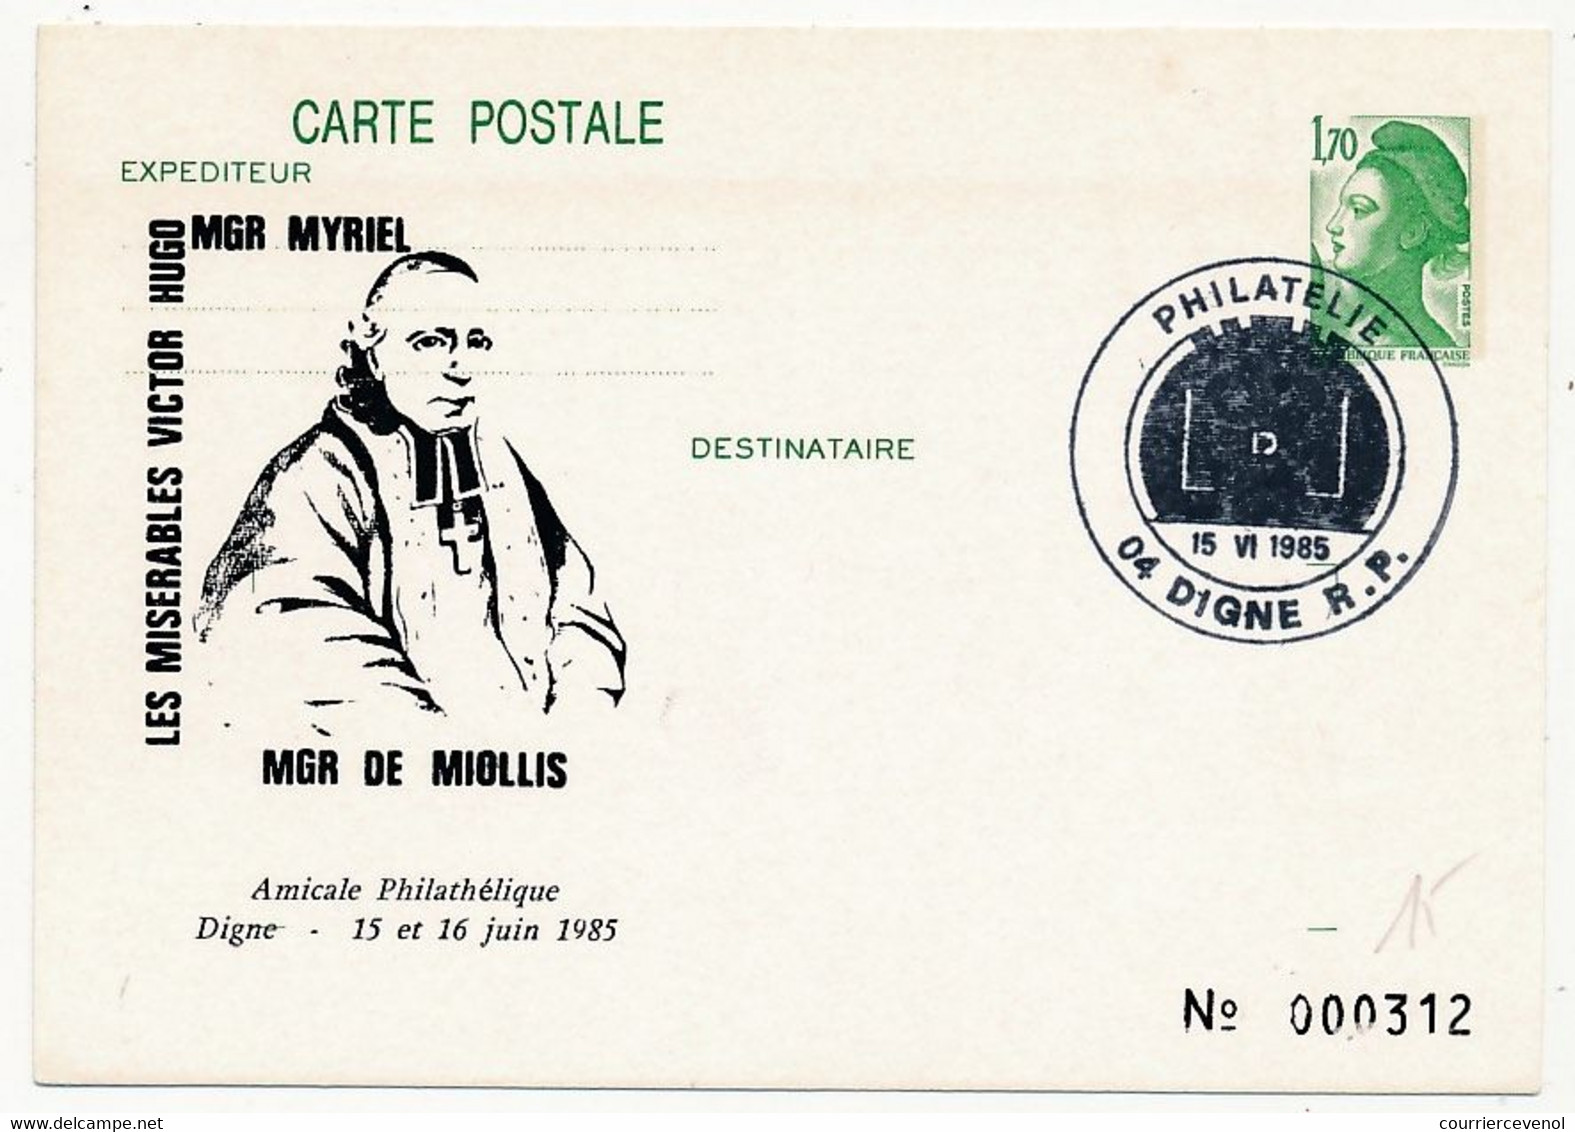 Entier Repiqué - 1,70 Liberté - Les Misérables - Victor Hugo - Mgr Myriel / Mgr De Myolis - DIGNE 1985 - Overprinter Postcards (before 1995)